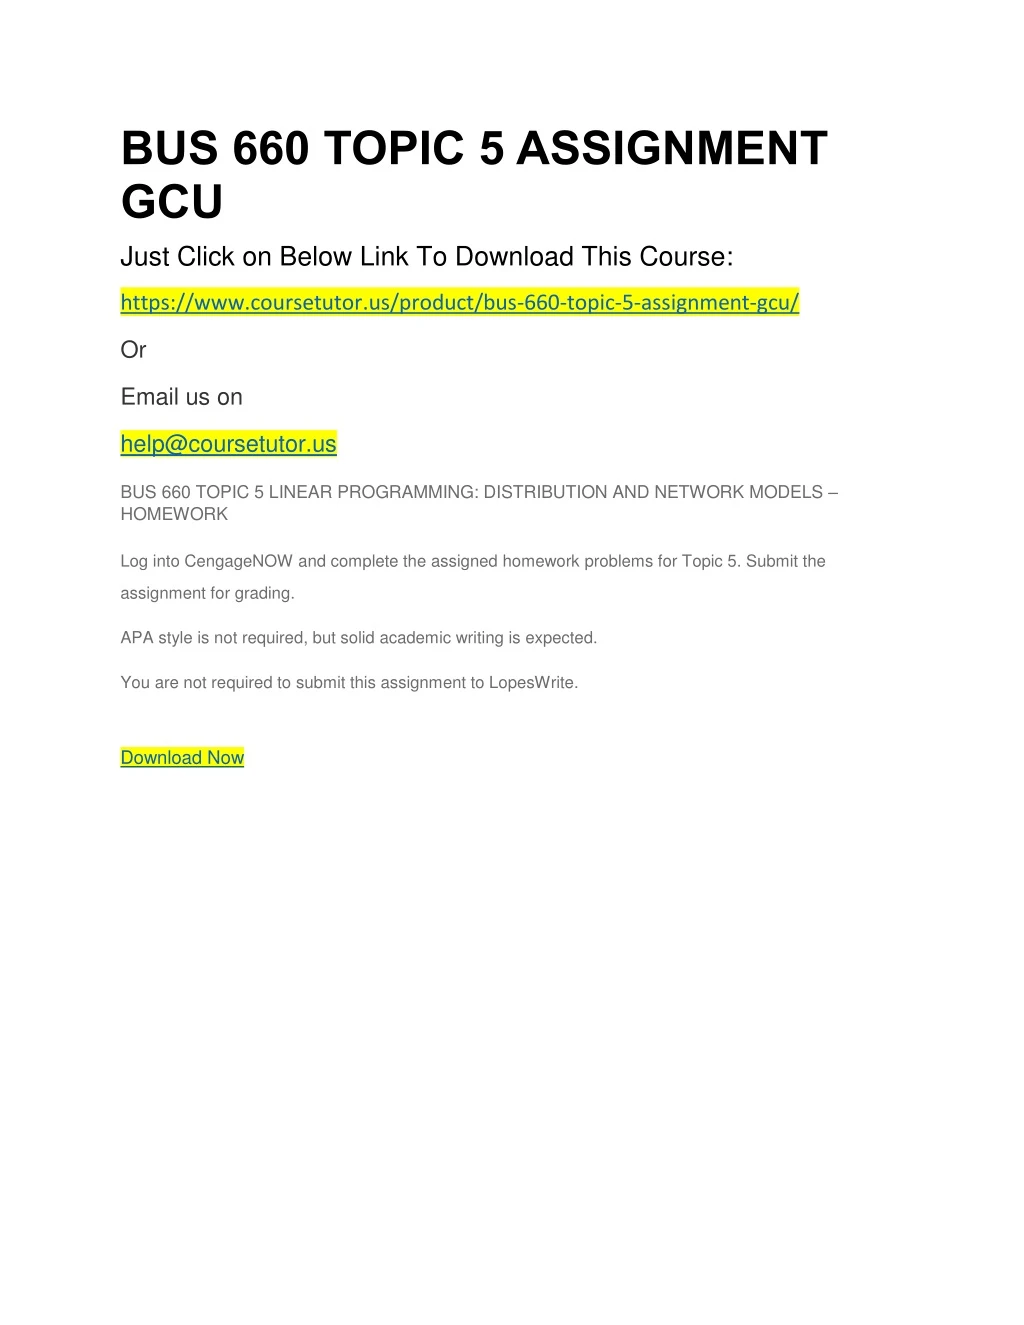 bus 660 topic 5 assignment gcu just click